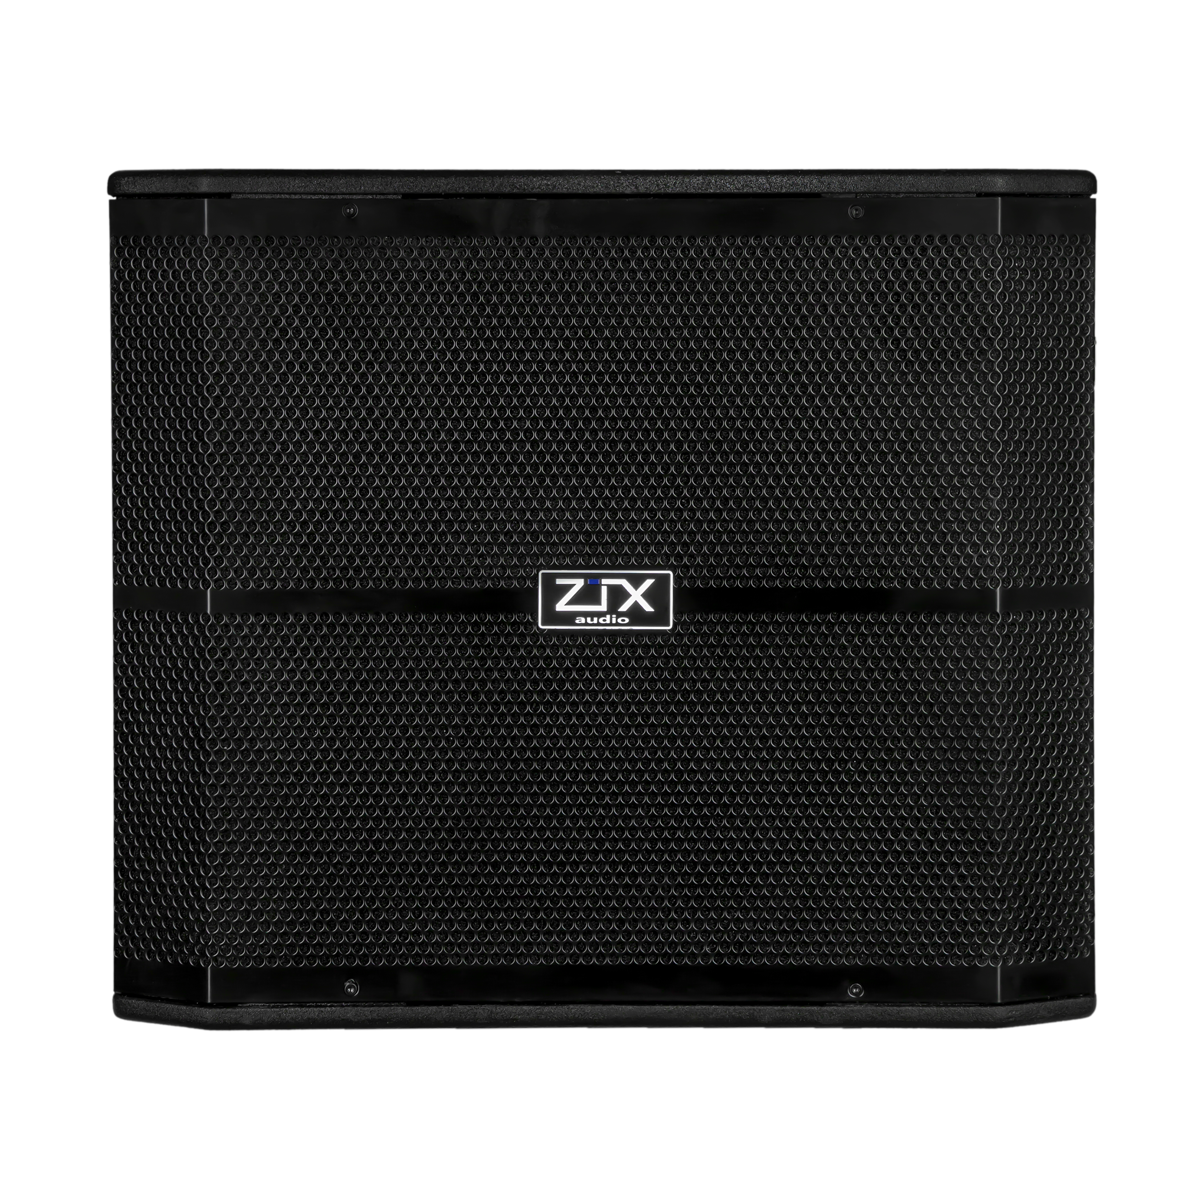 ZTX audio VR918A Активный 18-дюймовый субвуфер